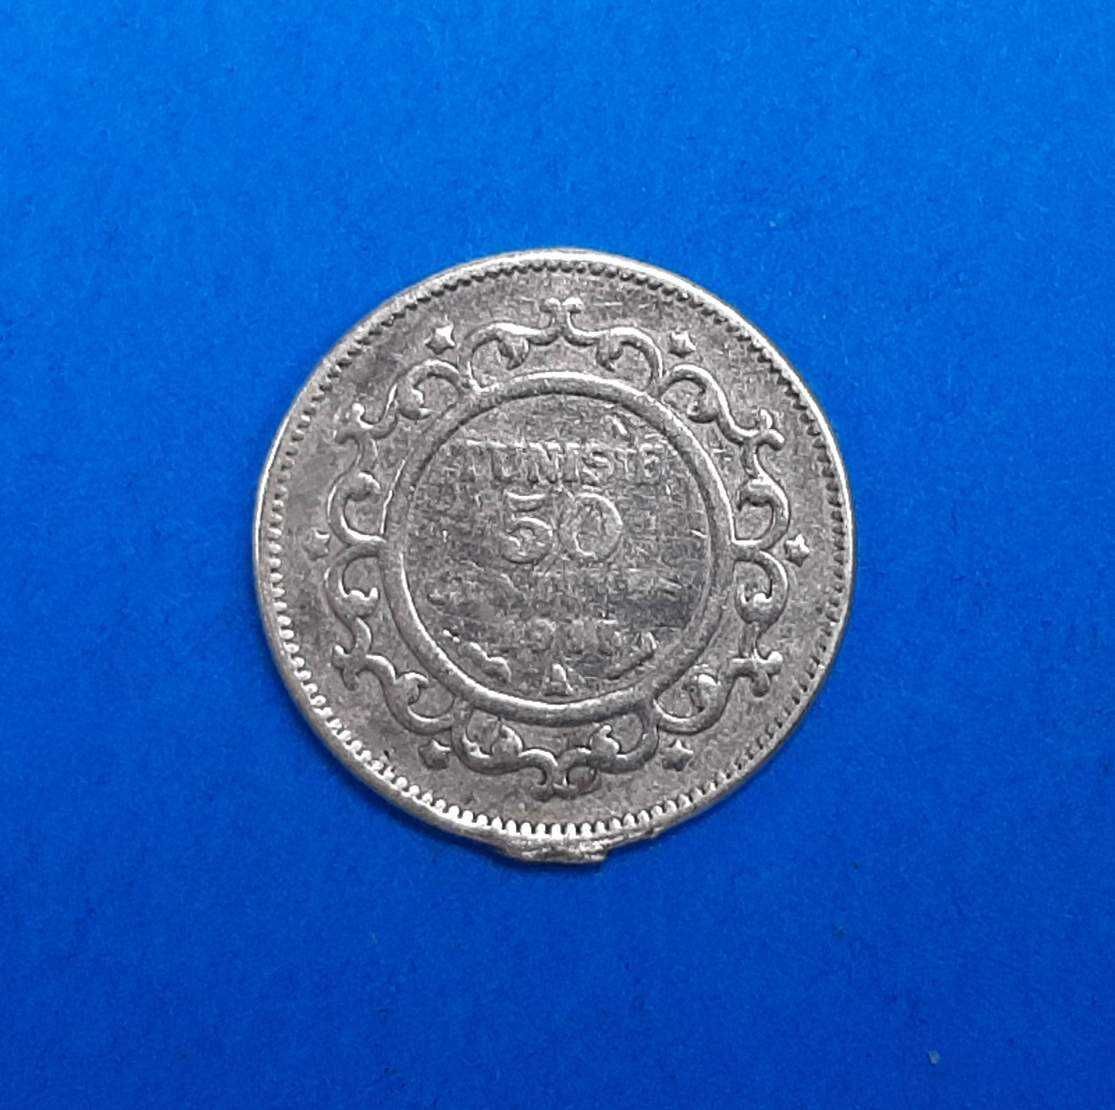 Tunezja 50 centymów, rok 1918, srebro 0,835